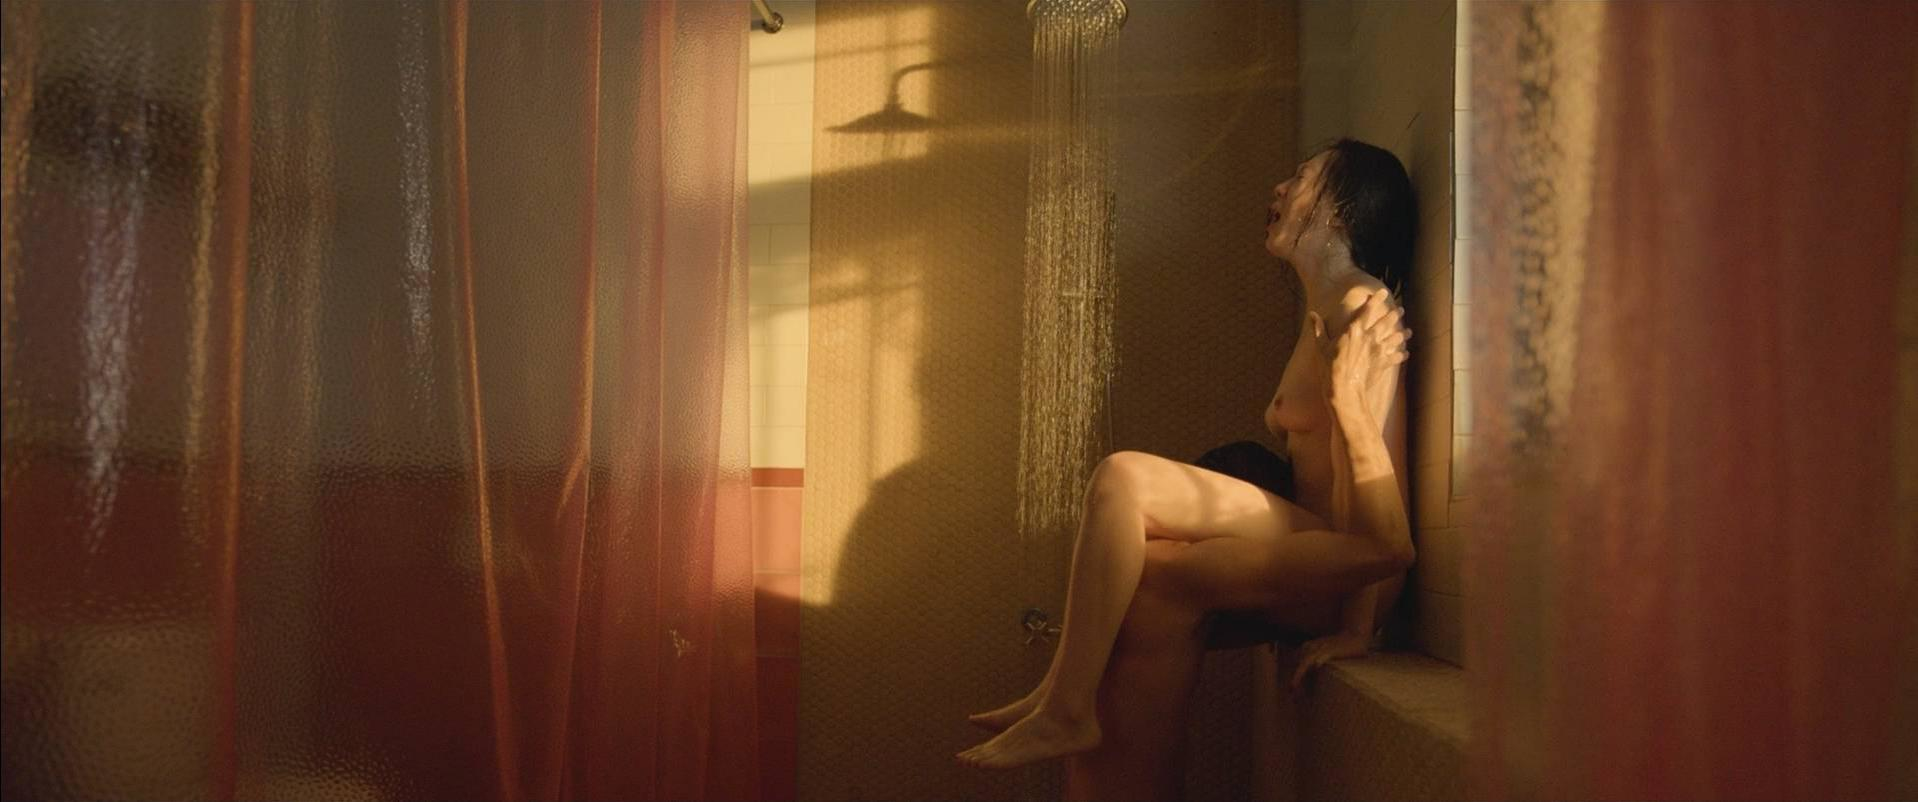 Ivy shao nude - 🧡 Xing Li, Ivy Shao Nude - The Tenants Downstairs (2016) .